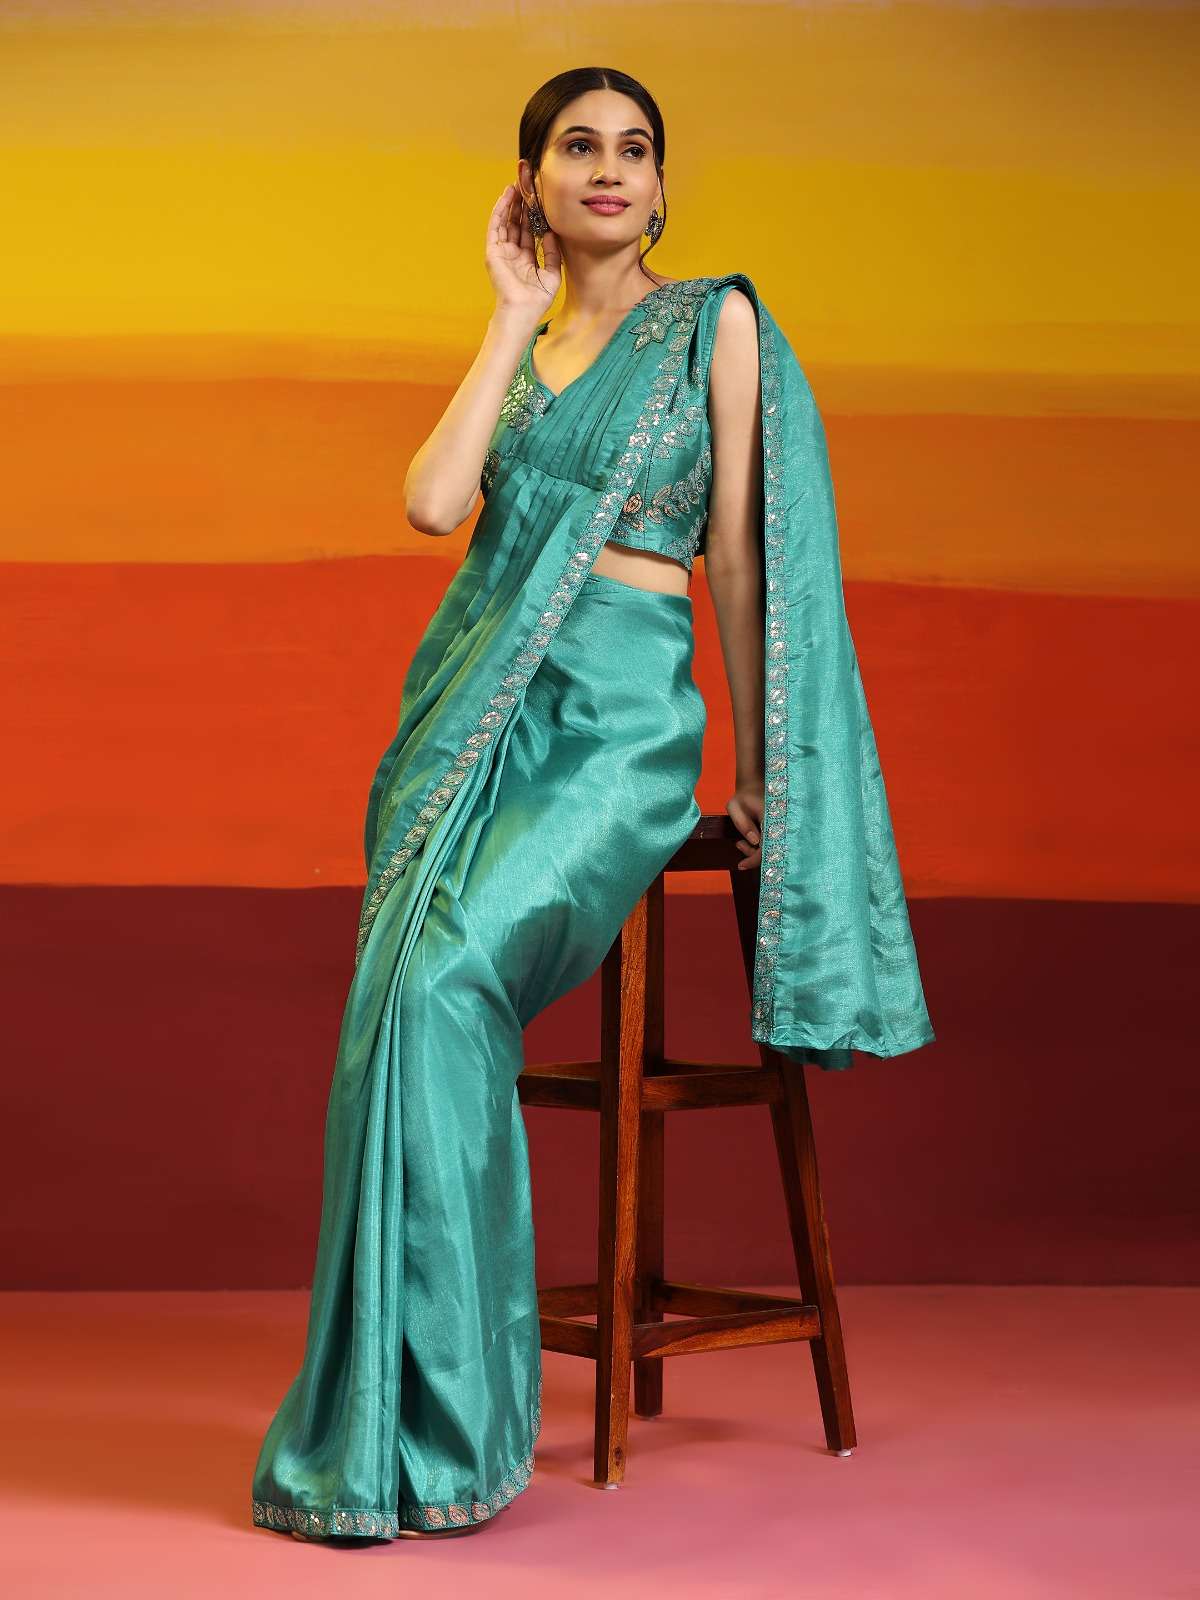 Blue Silk Saree ready to wear saree partywear saree 1 min saree wedding  saree | eBay